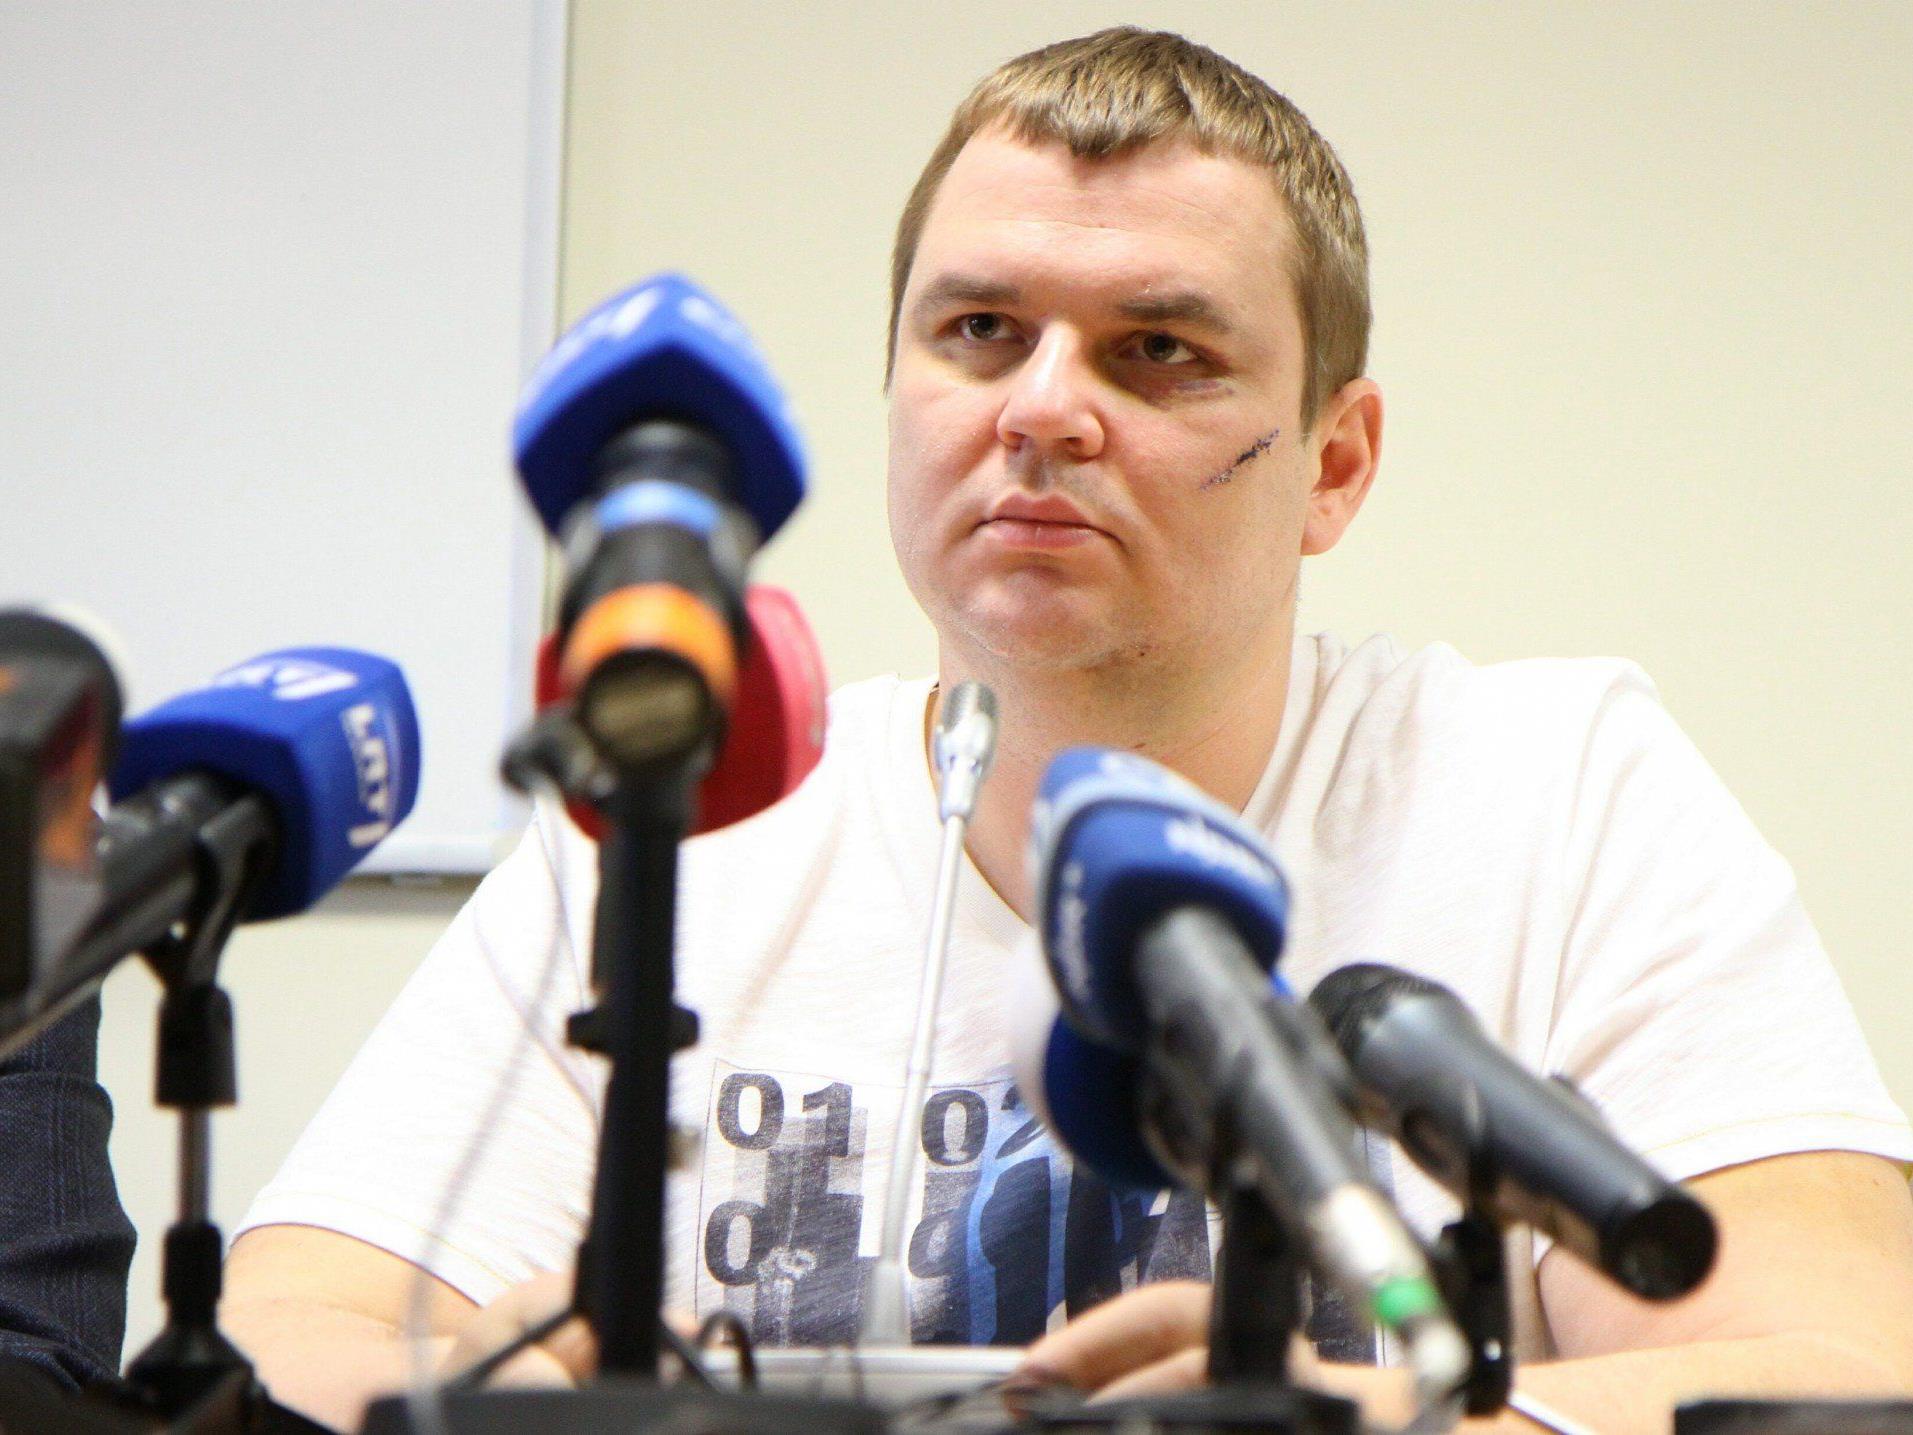 Regierungskritiker erhebt Vorwürfe gegen "russischsprachige Folterer".